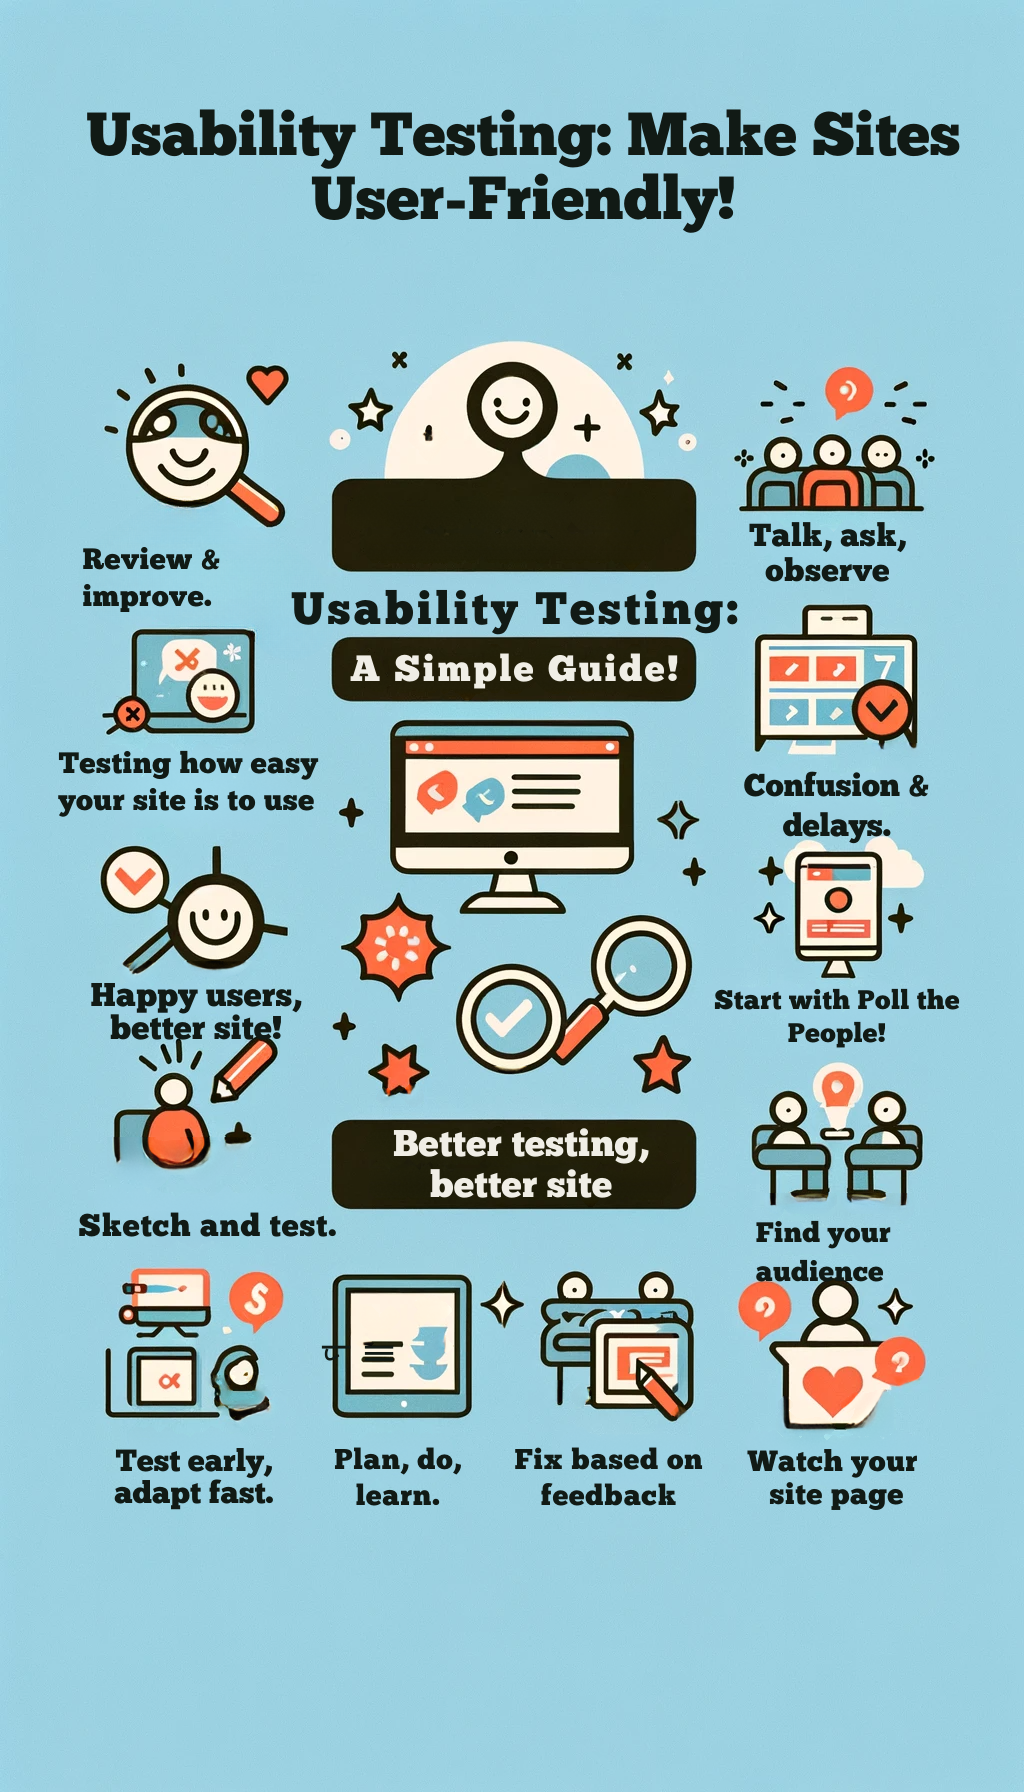 Usability Testing Make Sites User-Friendly!